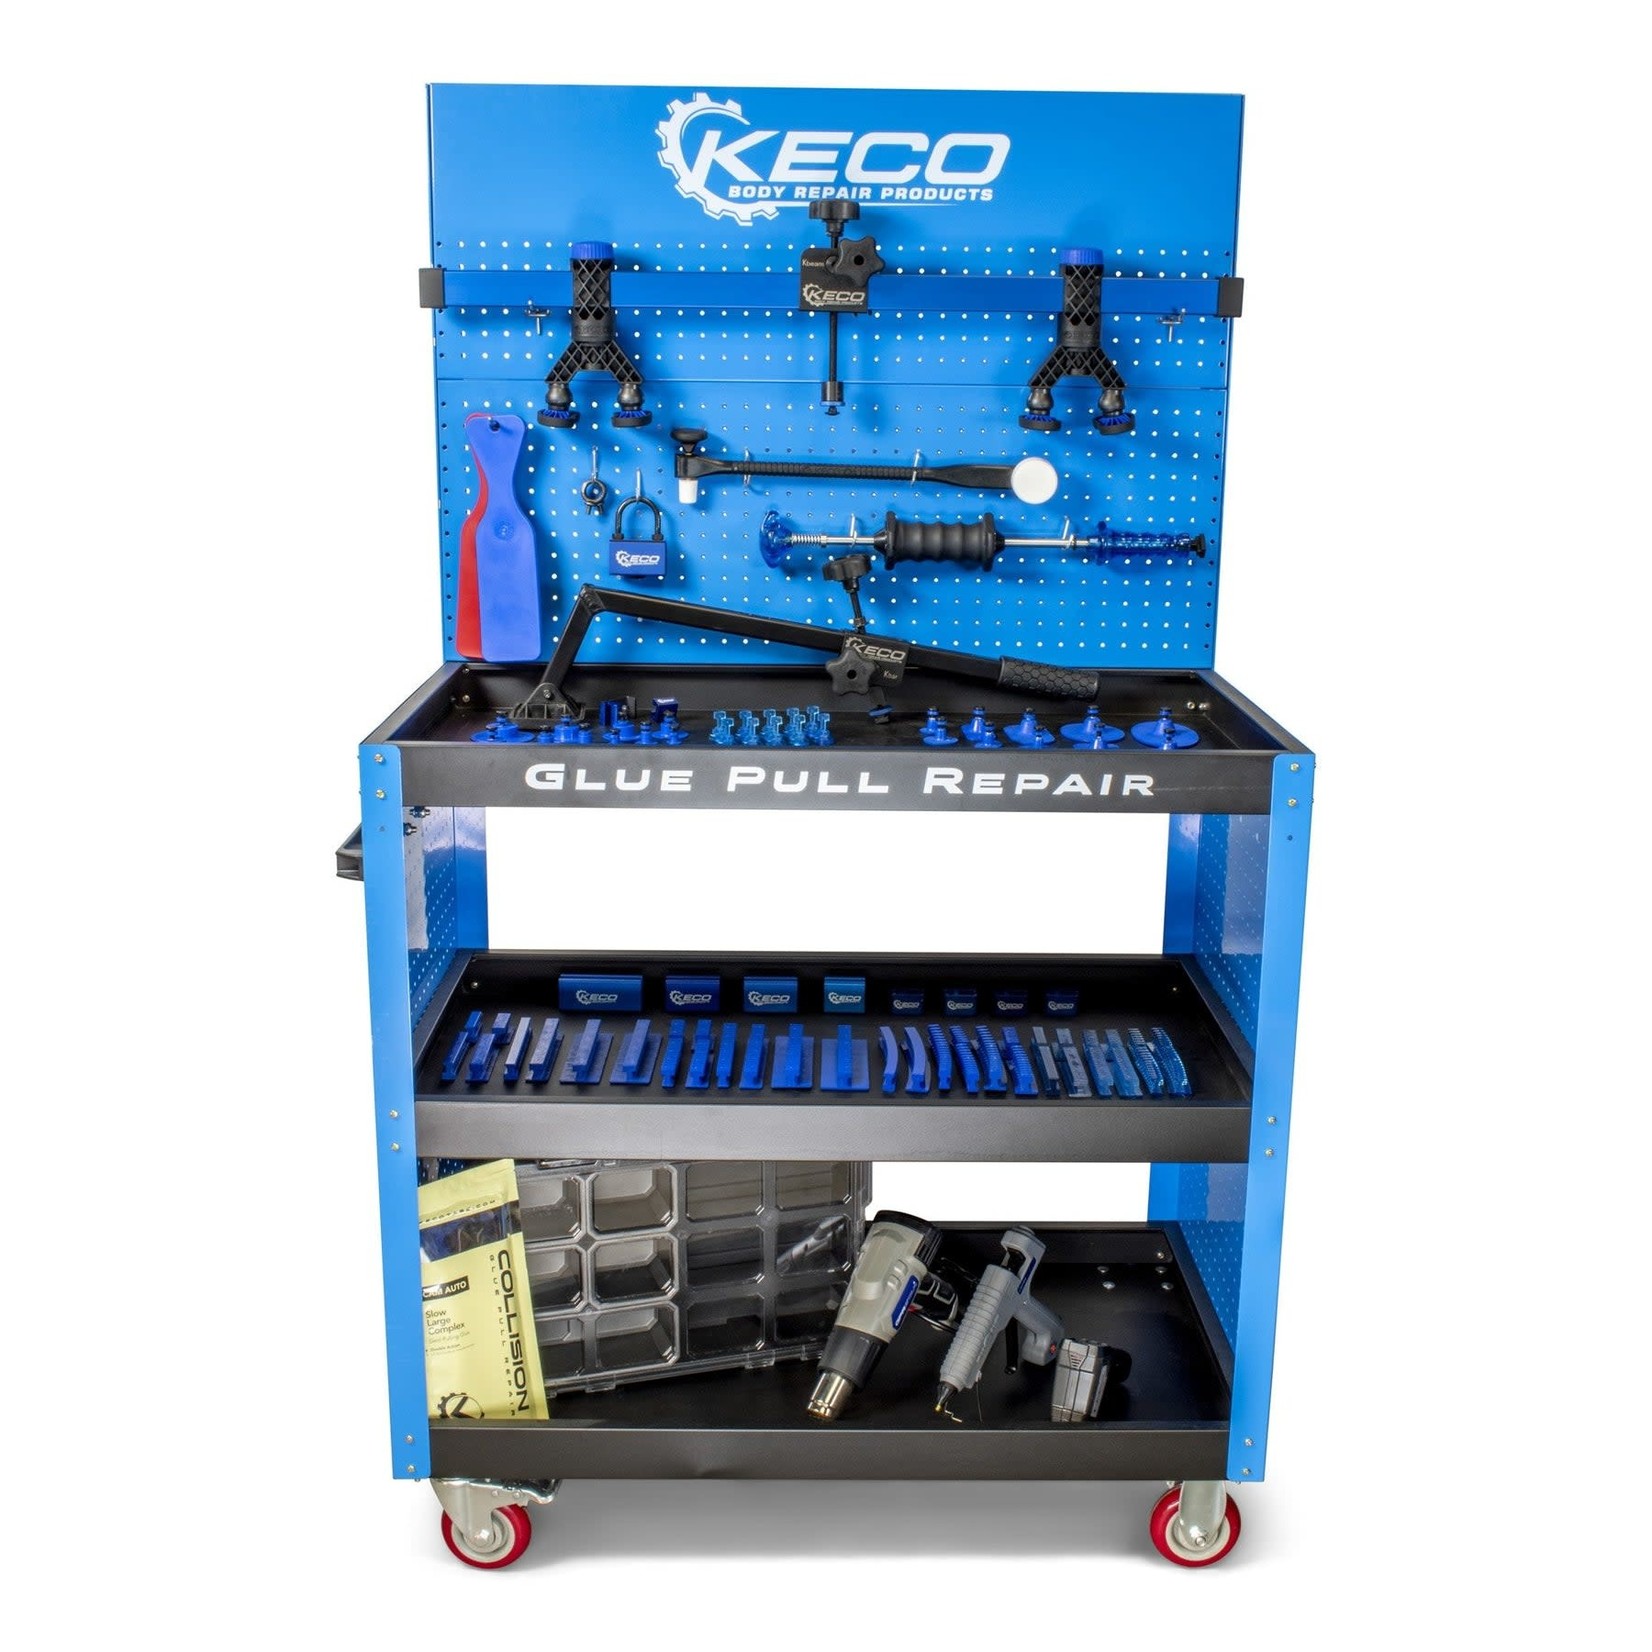 KECO Keco Level 1 Glue Pull Collision Pro Kit with Cart - 110 V